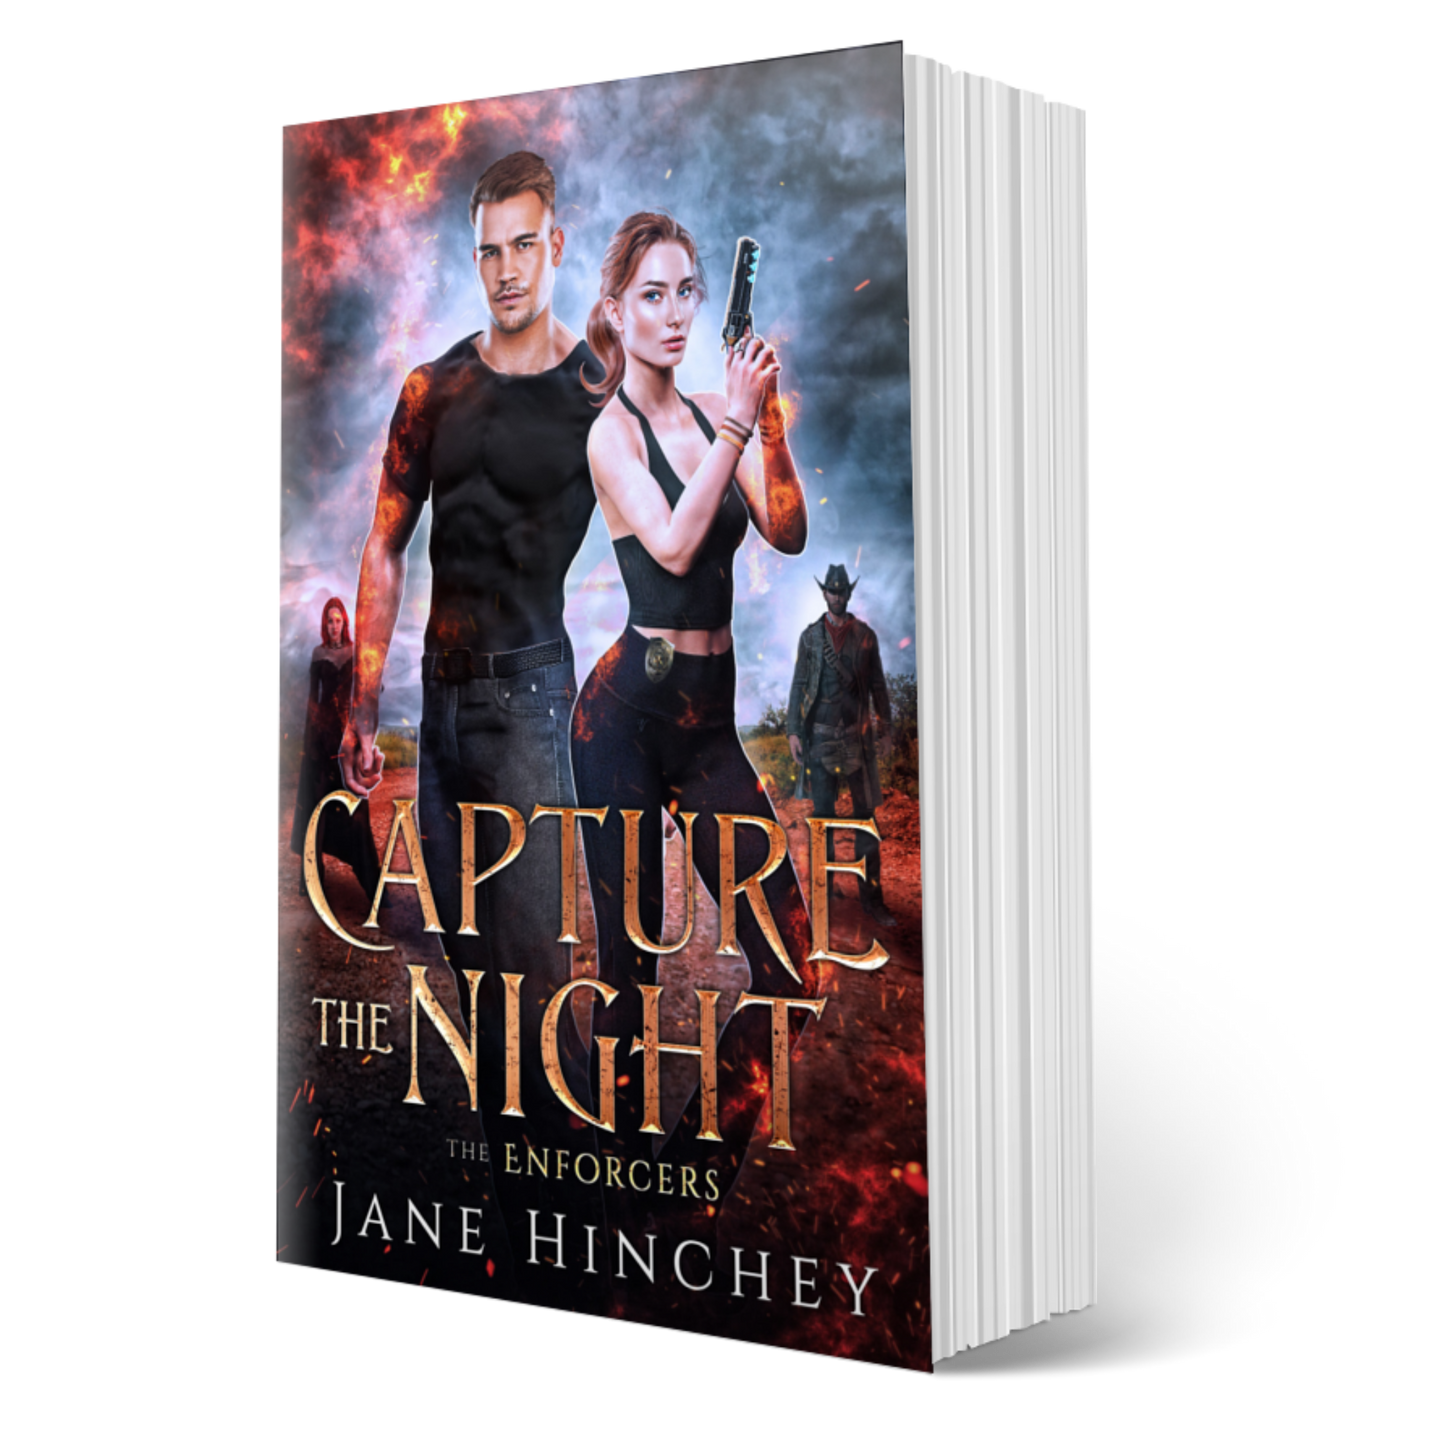 Capture the Night by Jane Hinchey